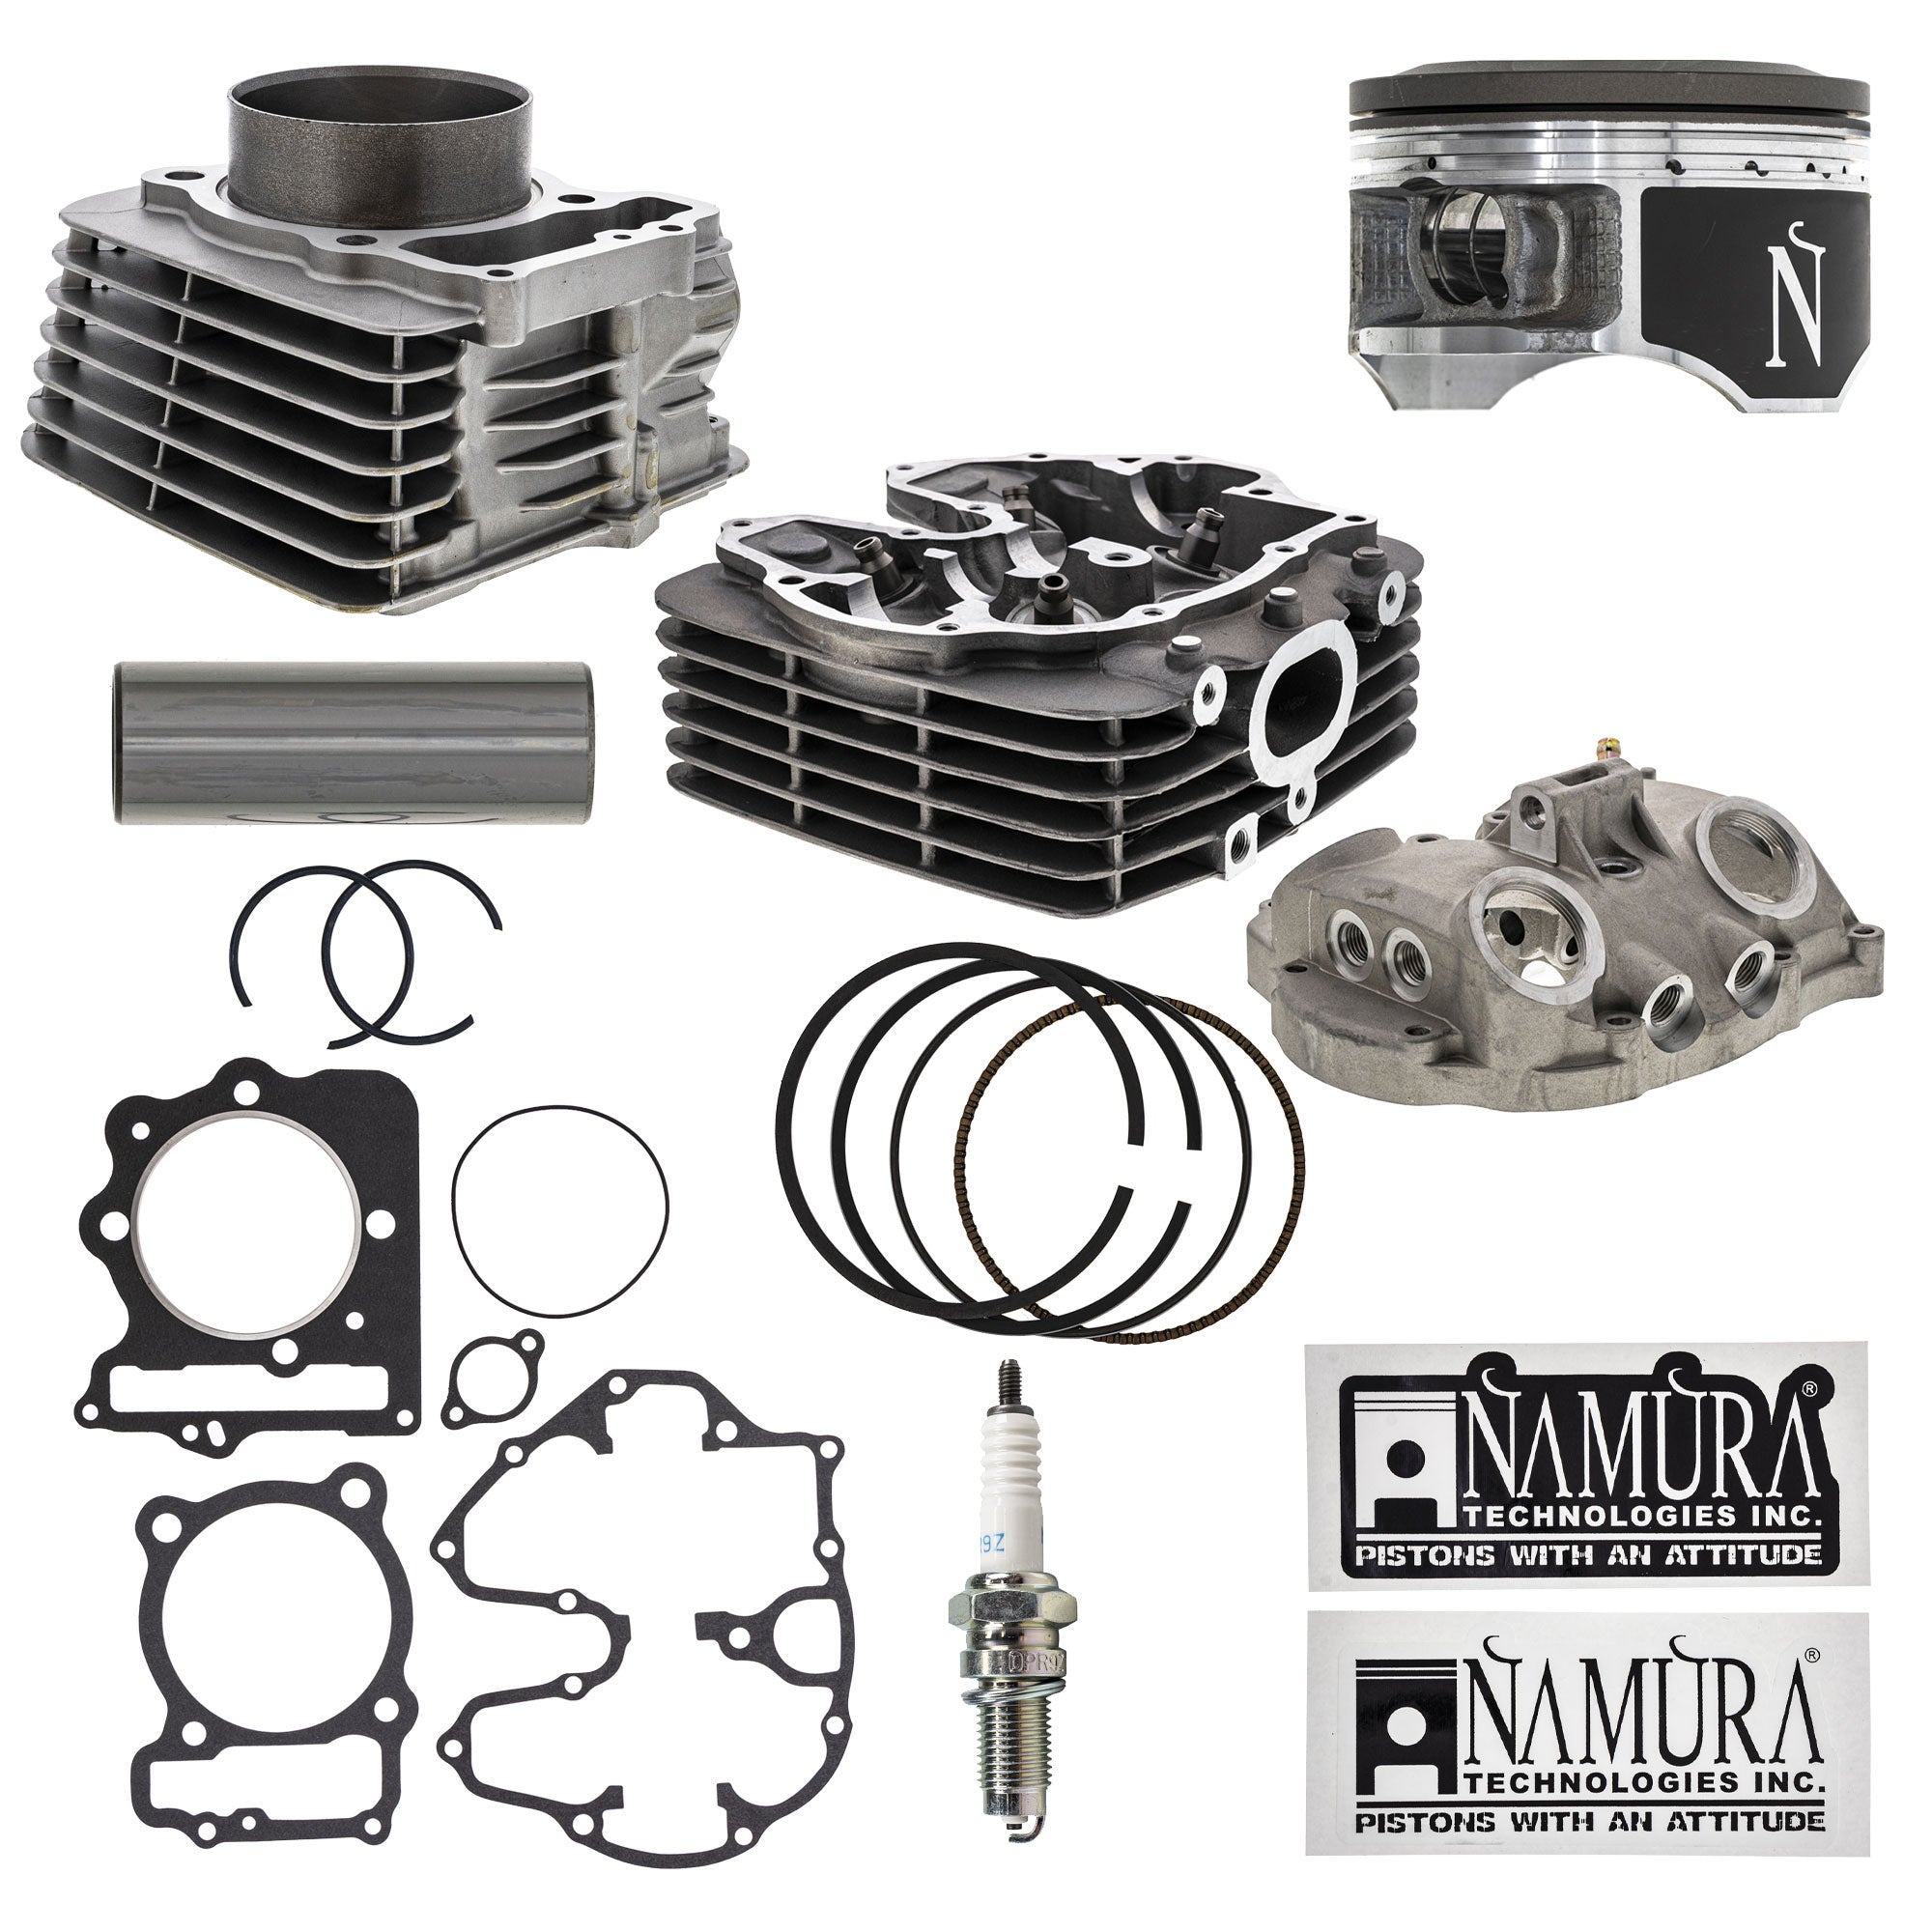 Cylinder Namura Piston Cylinder Head Gasket Spark Plug Kit for XR400R TRX400 SporTrax NICHE MK1012536